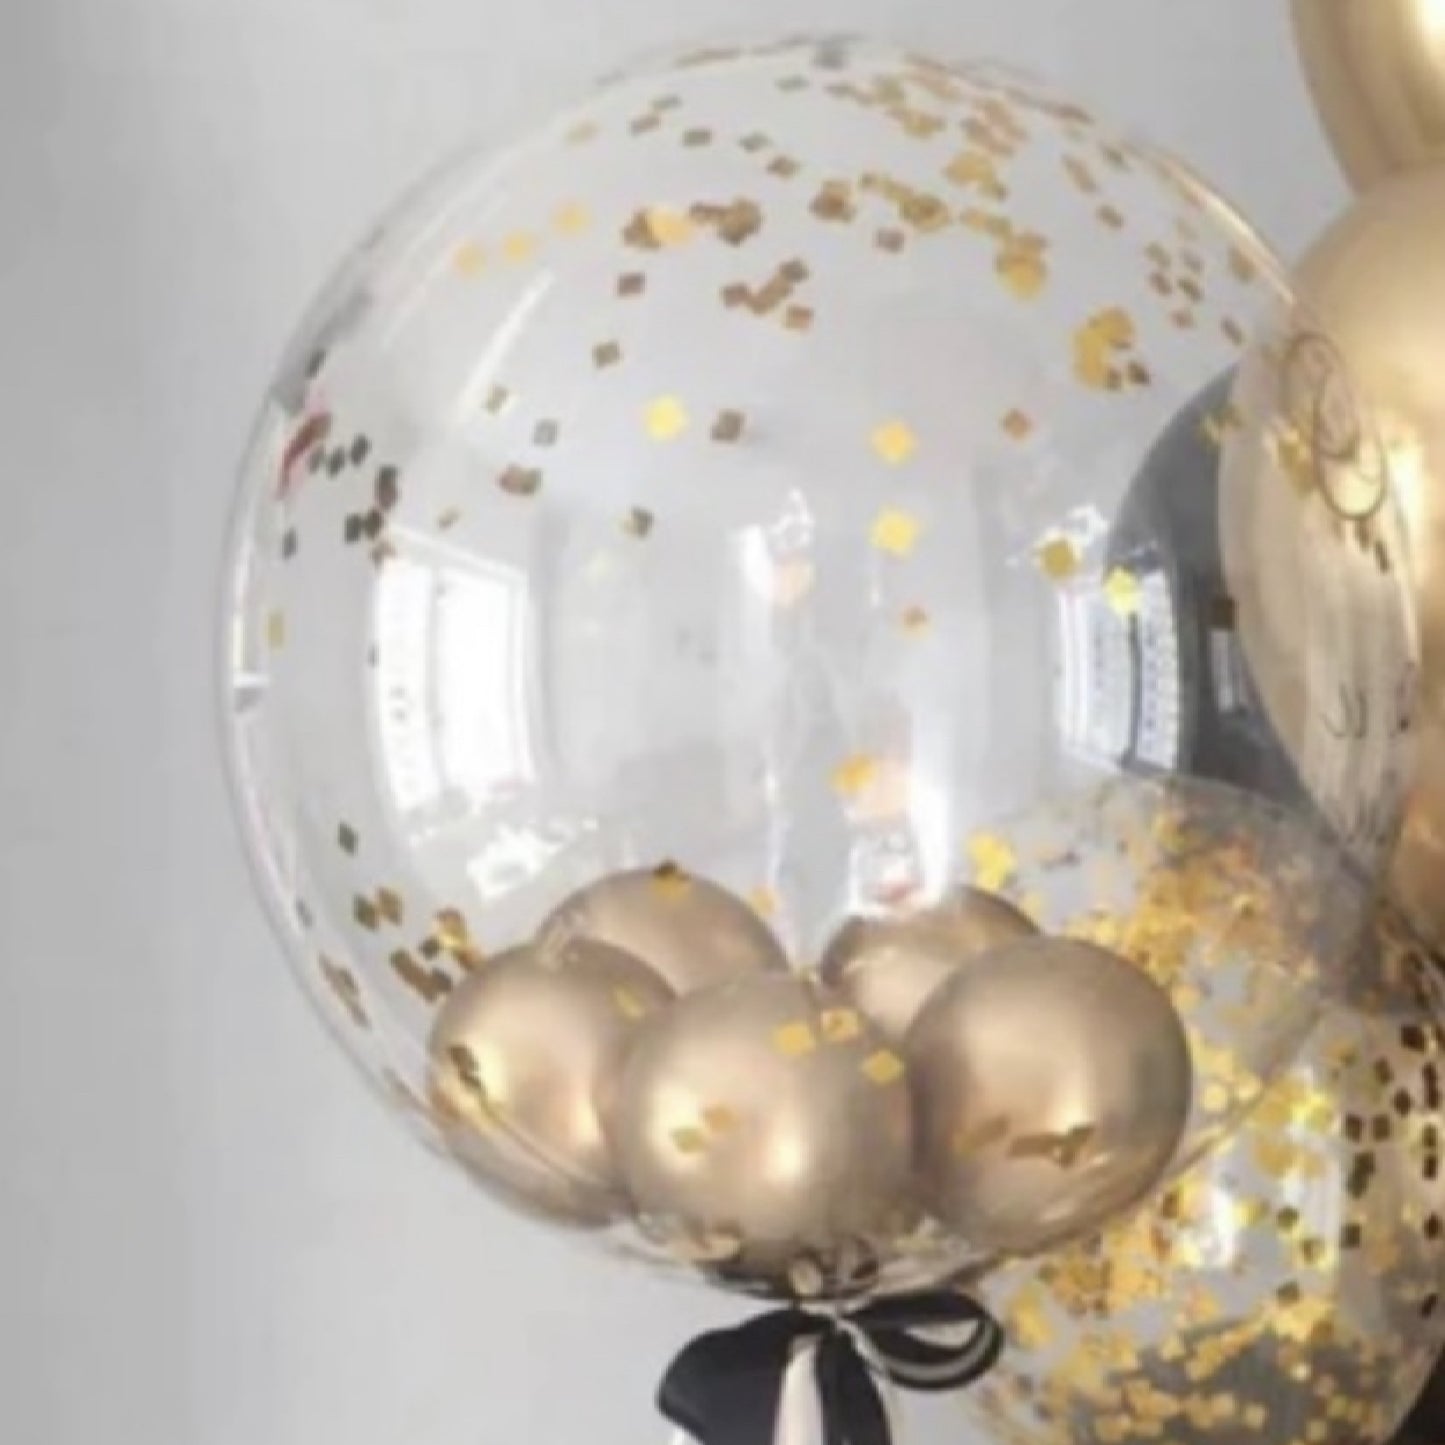 Clear bubble with gold confetti